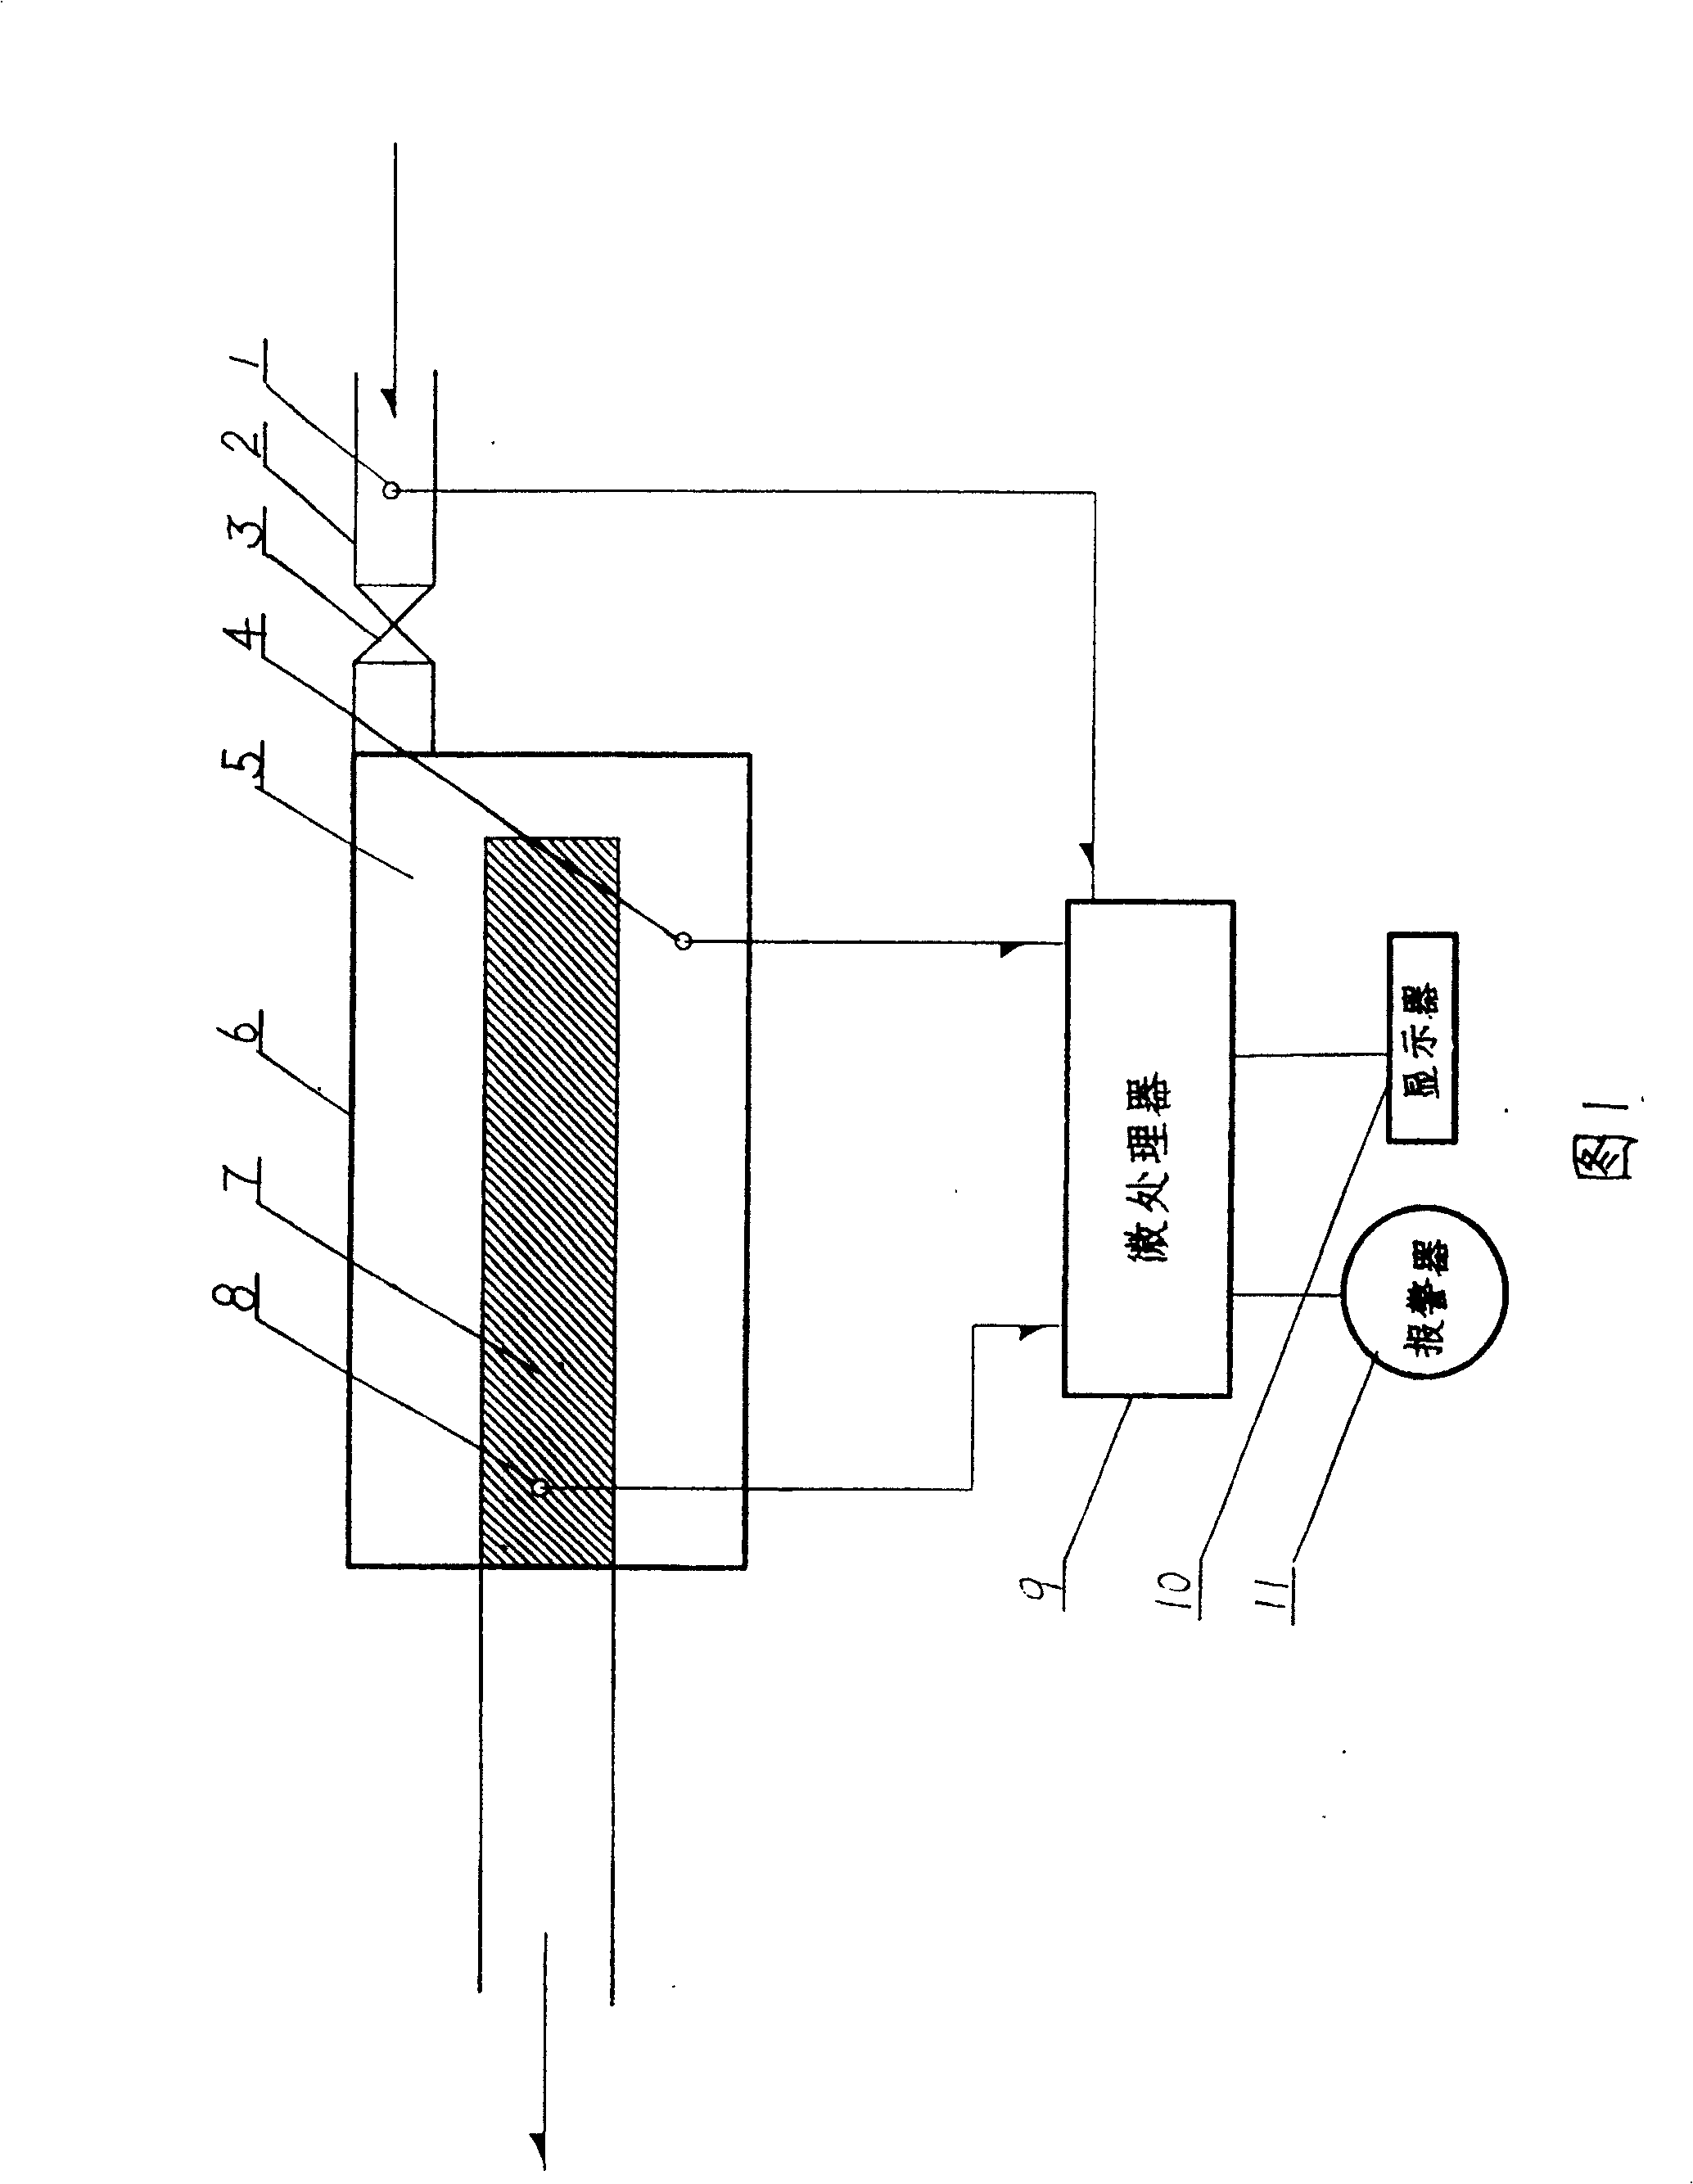 Method for monitoring blockage status of mechanical filter